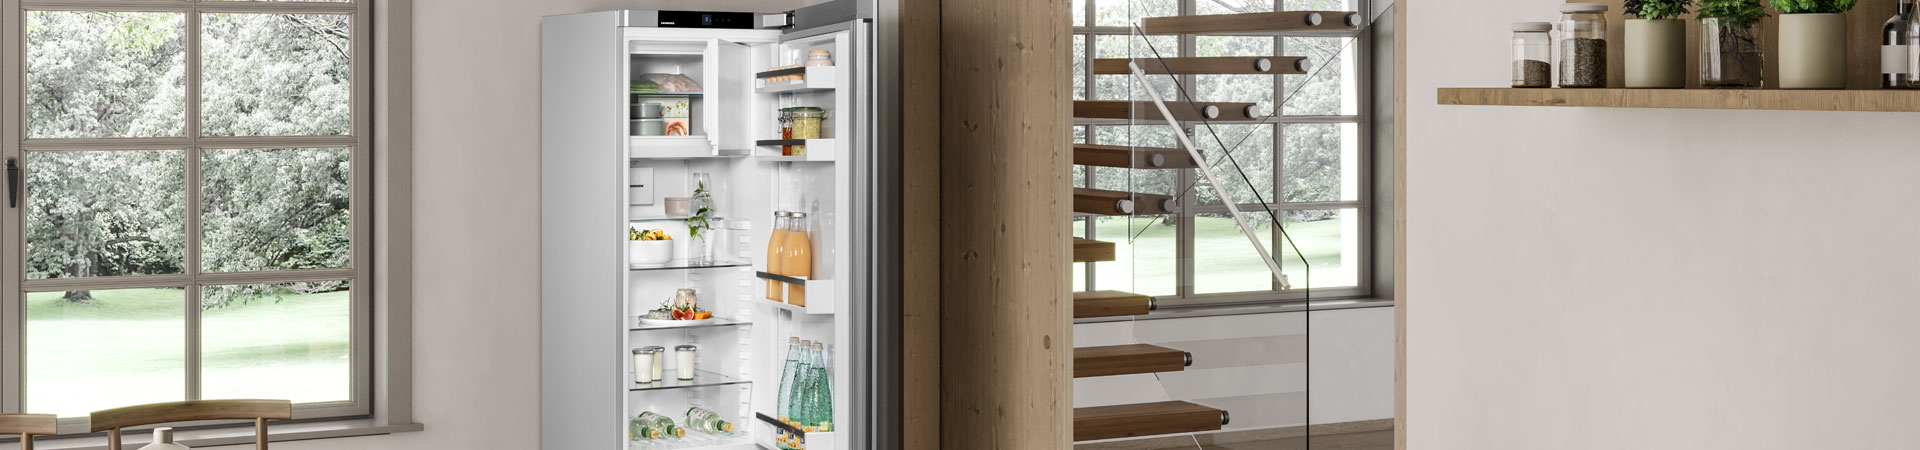 fridges-RBsfe5221-liebherr-ambient-1920x450